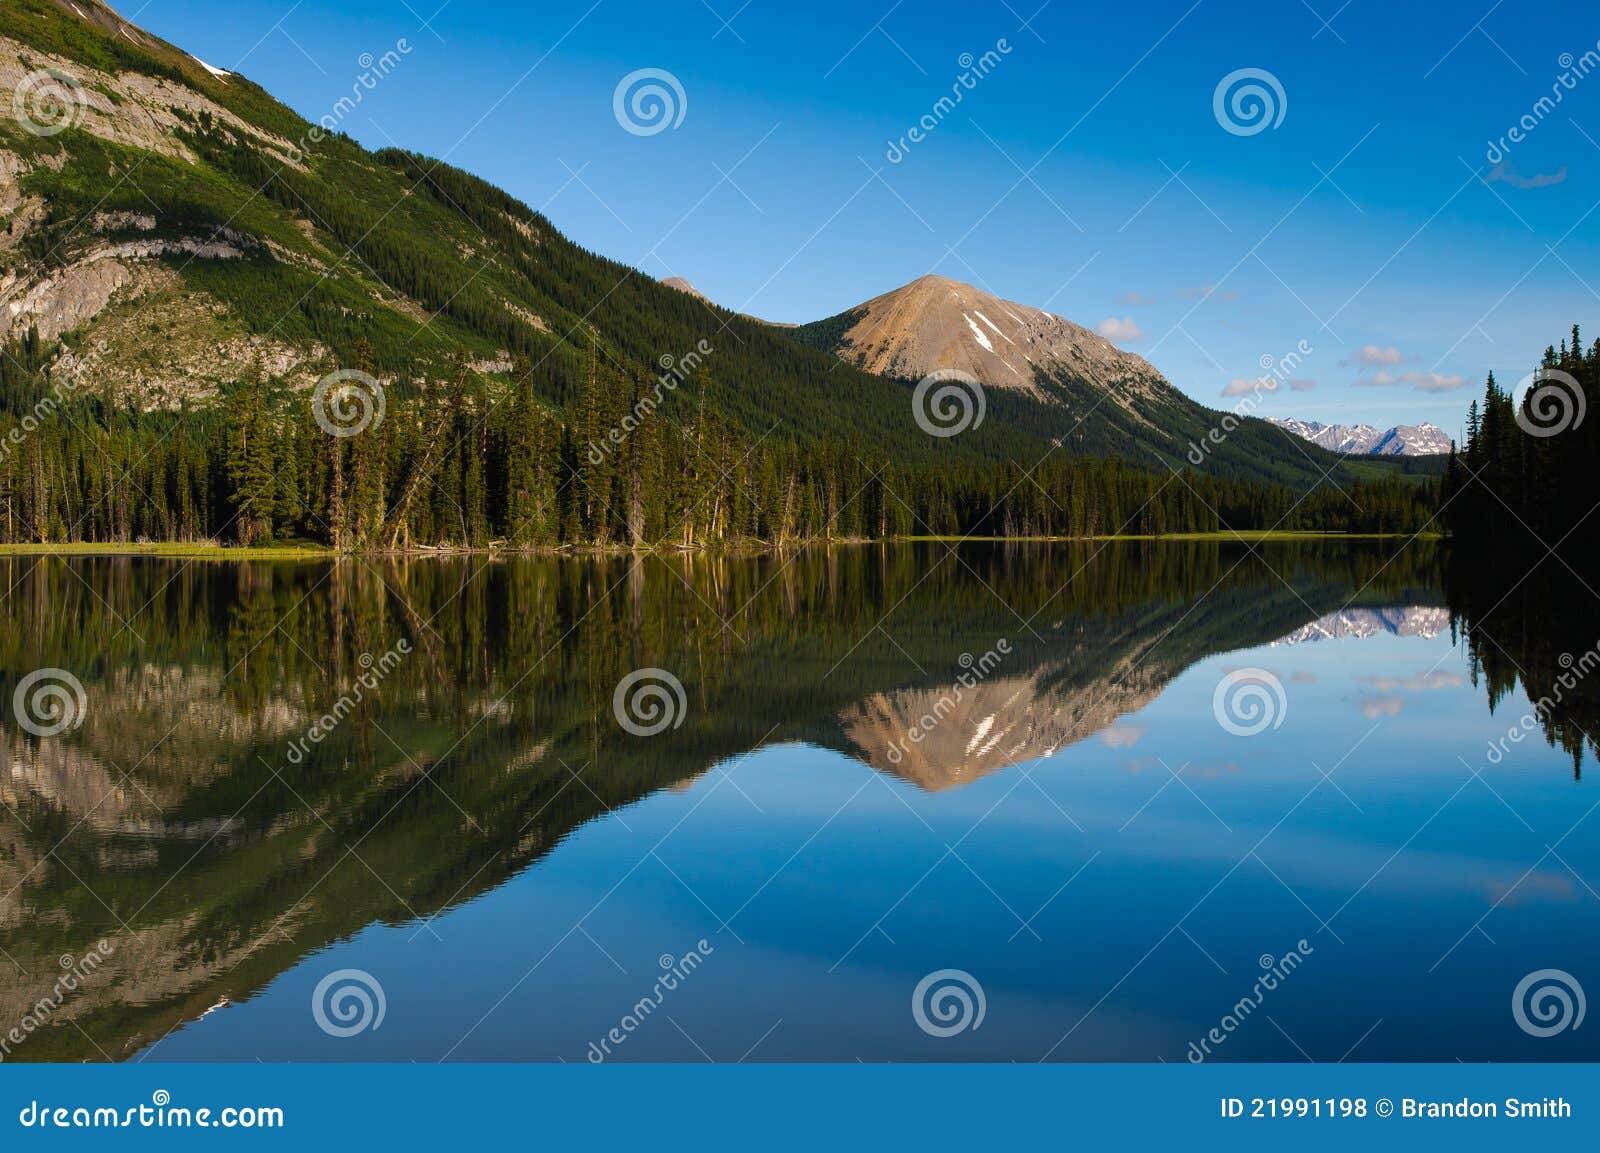 Mountain lake in Kananaskis country Alberta Canada in summer.